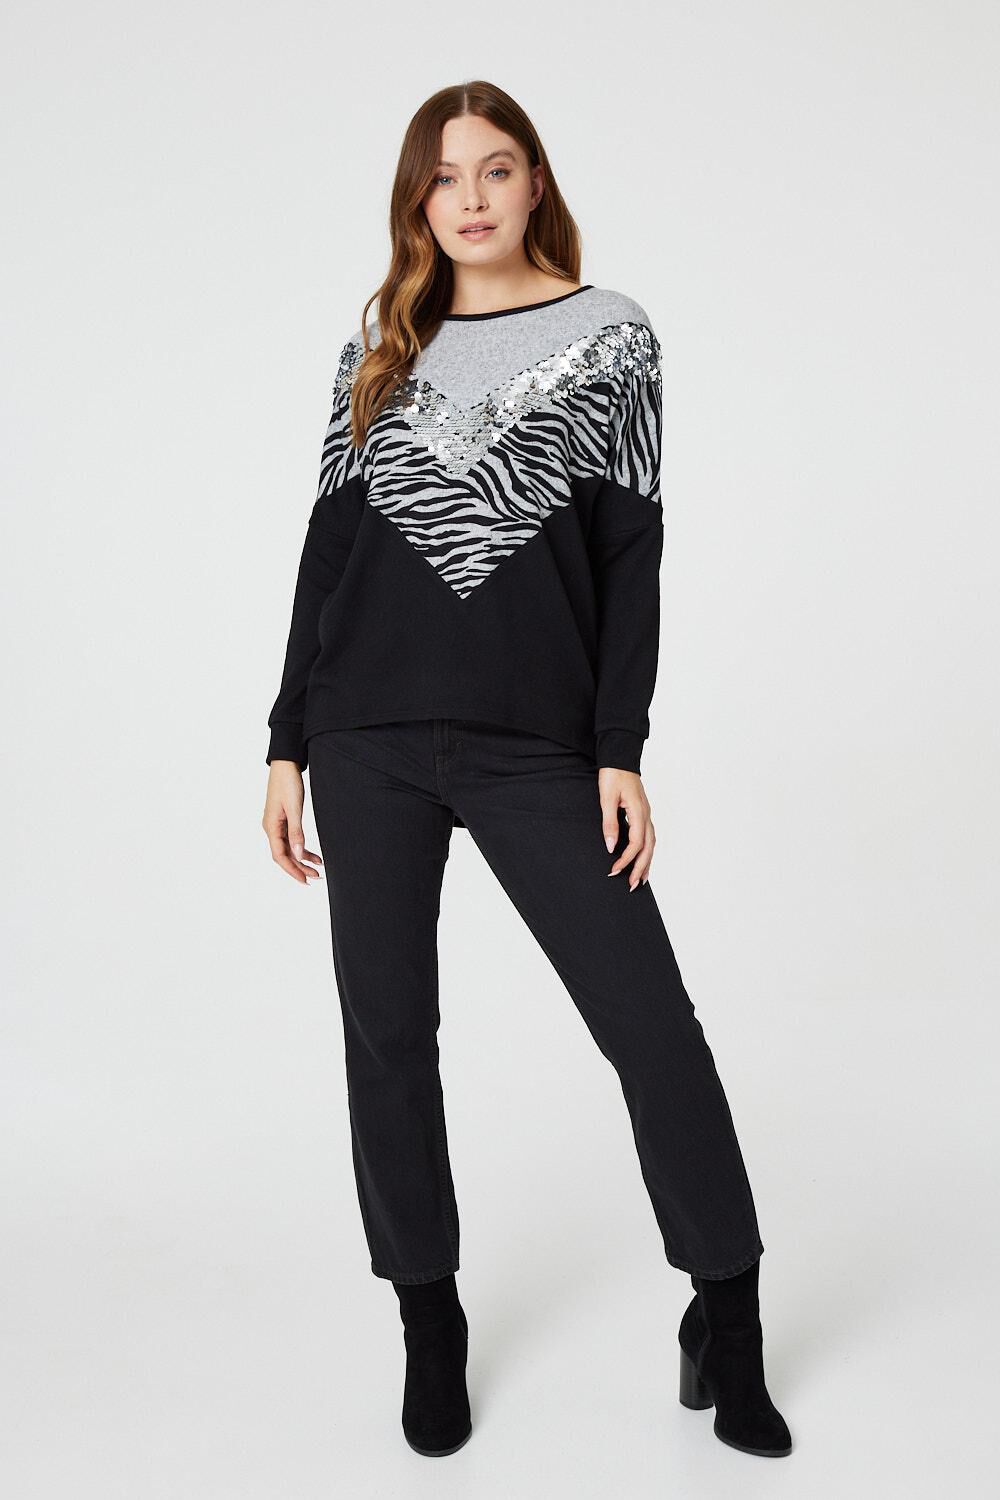 Izabel London Grey - Sequin Zebra Colour Block Jumper, Size: 12